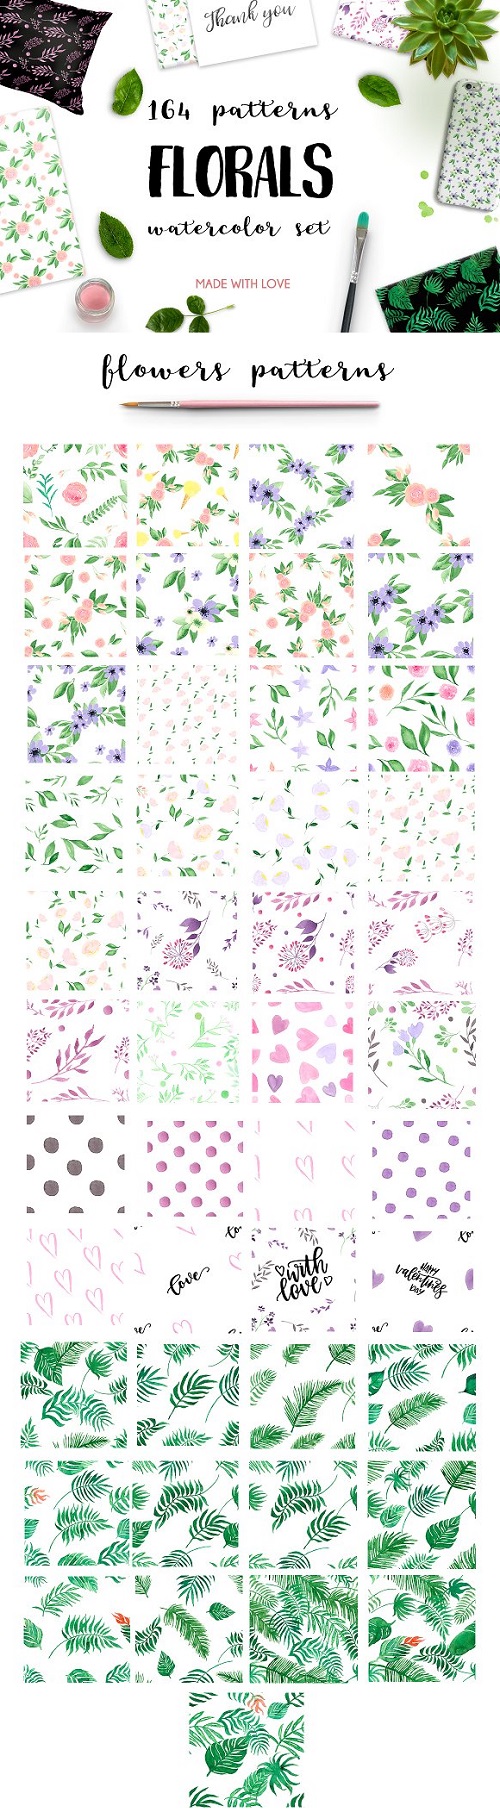 164 Watercolor FLORALS patterns - 1419549